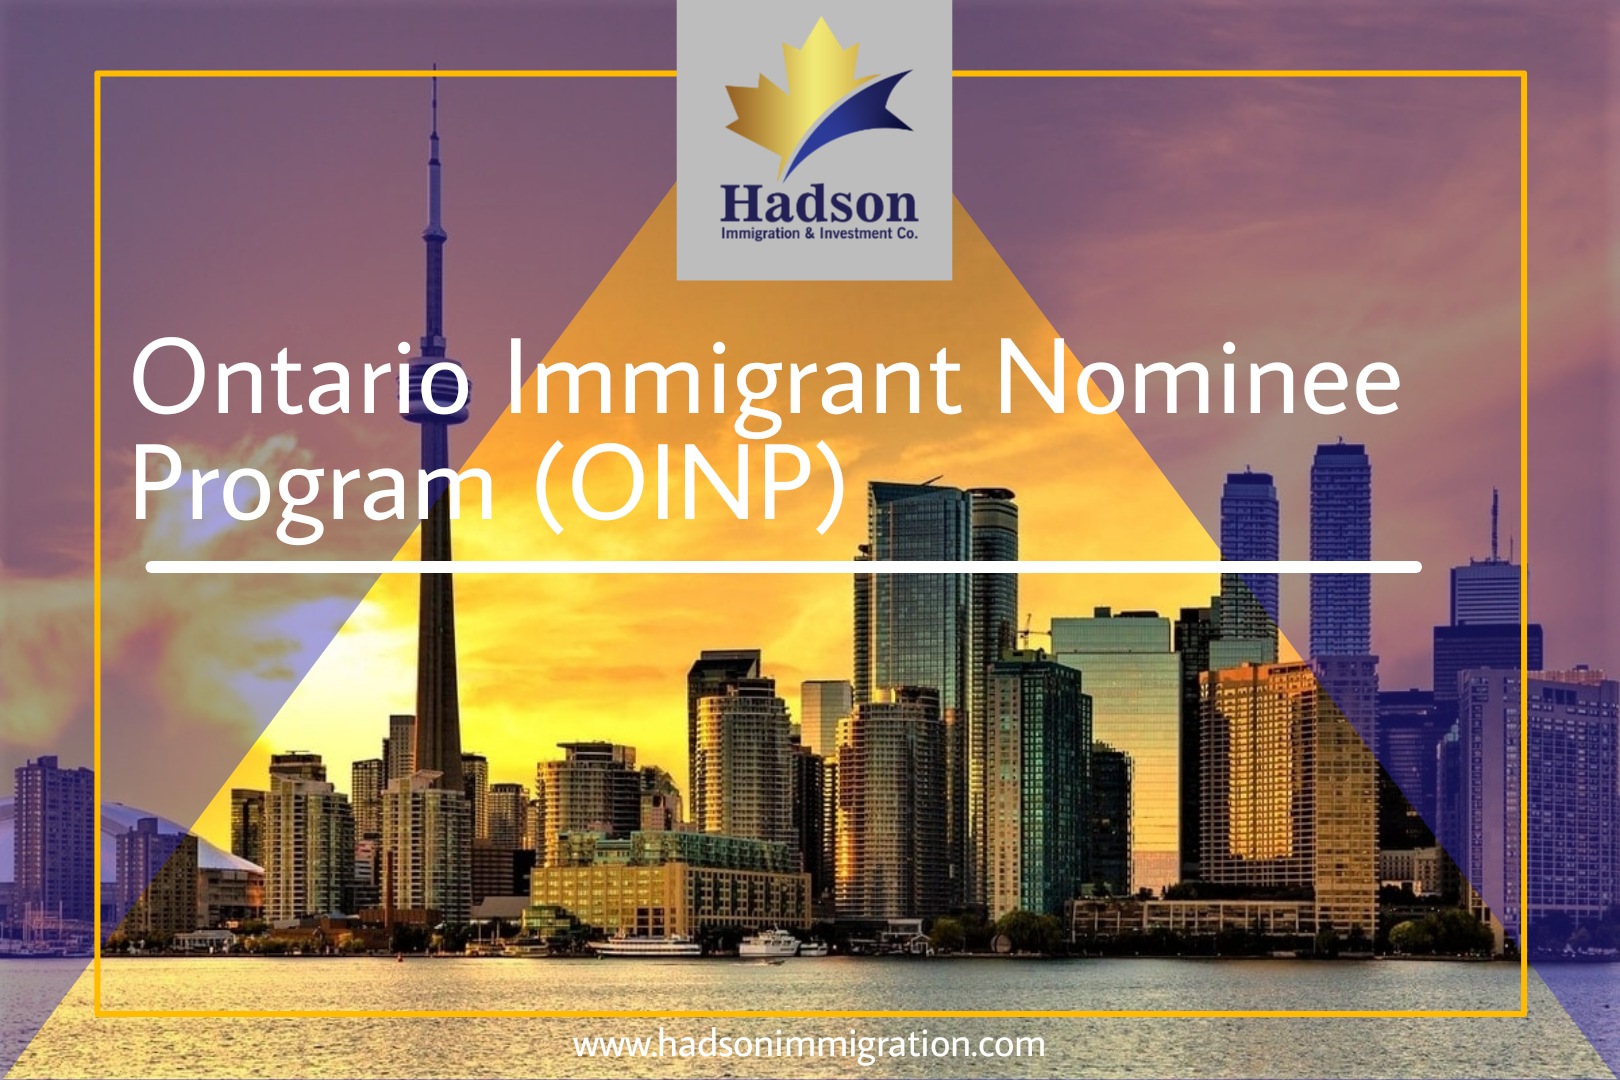 Ontario Immigrant Nominee Program (OINP) Hadson Immigration